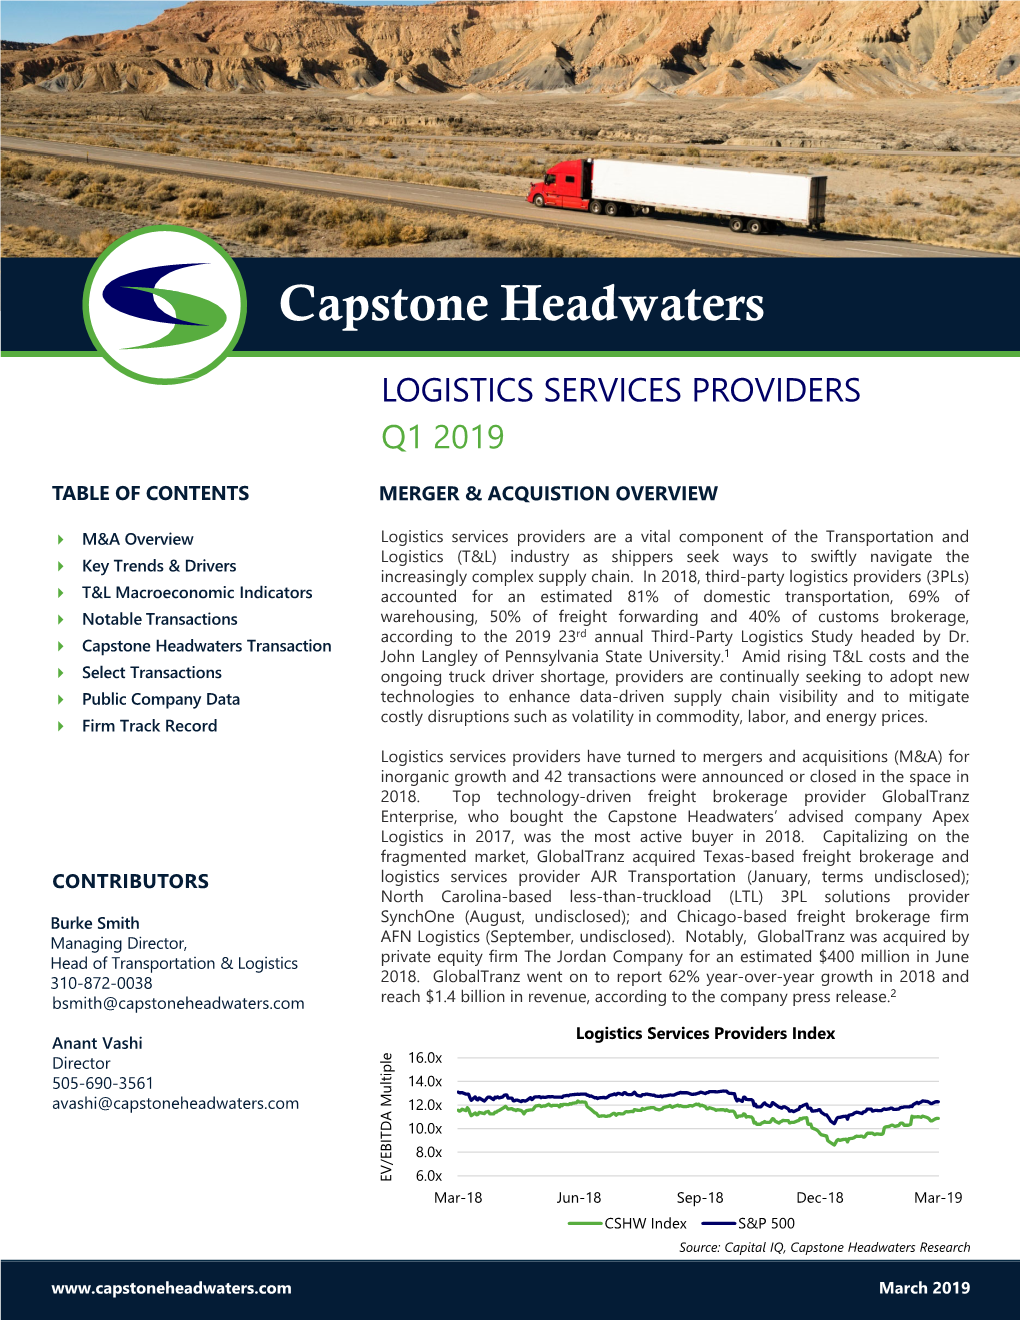 Capstone Headwaters Logistics Services Providers M&A Coverage